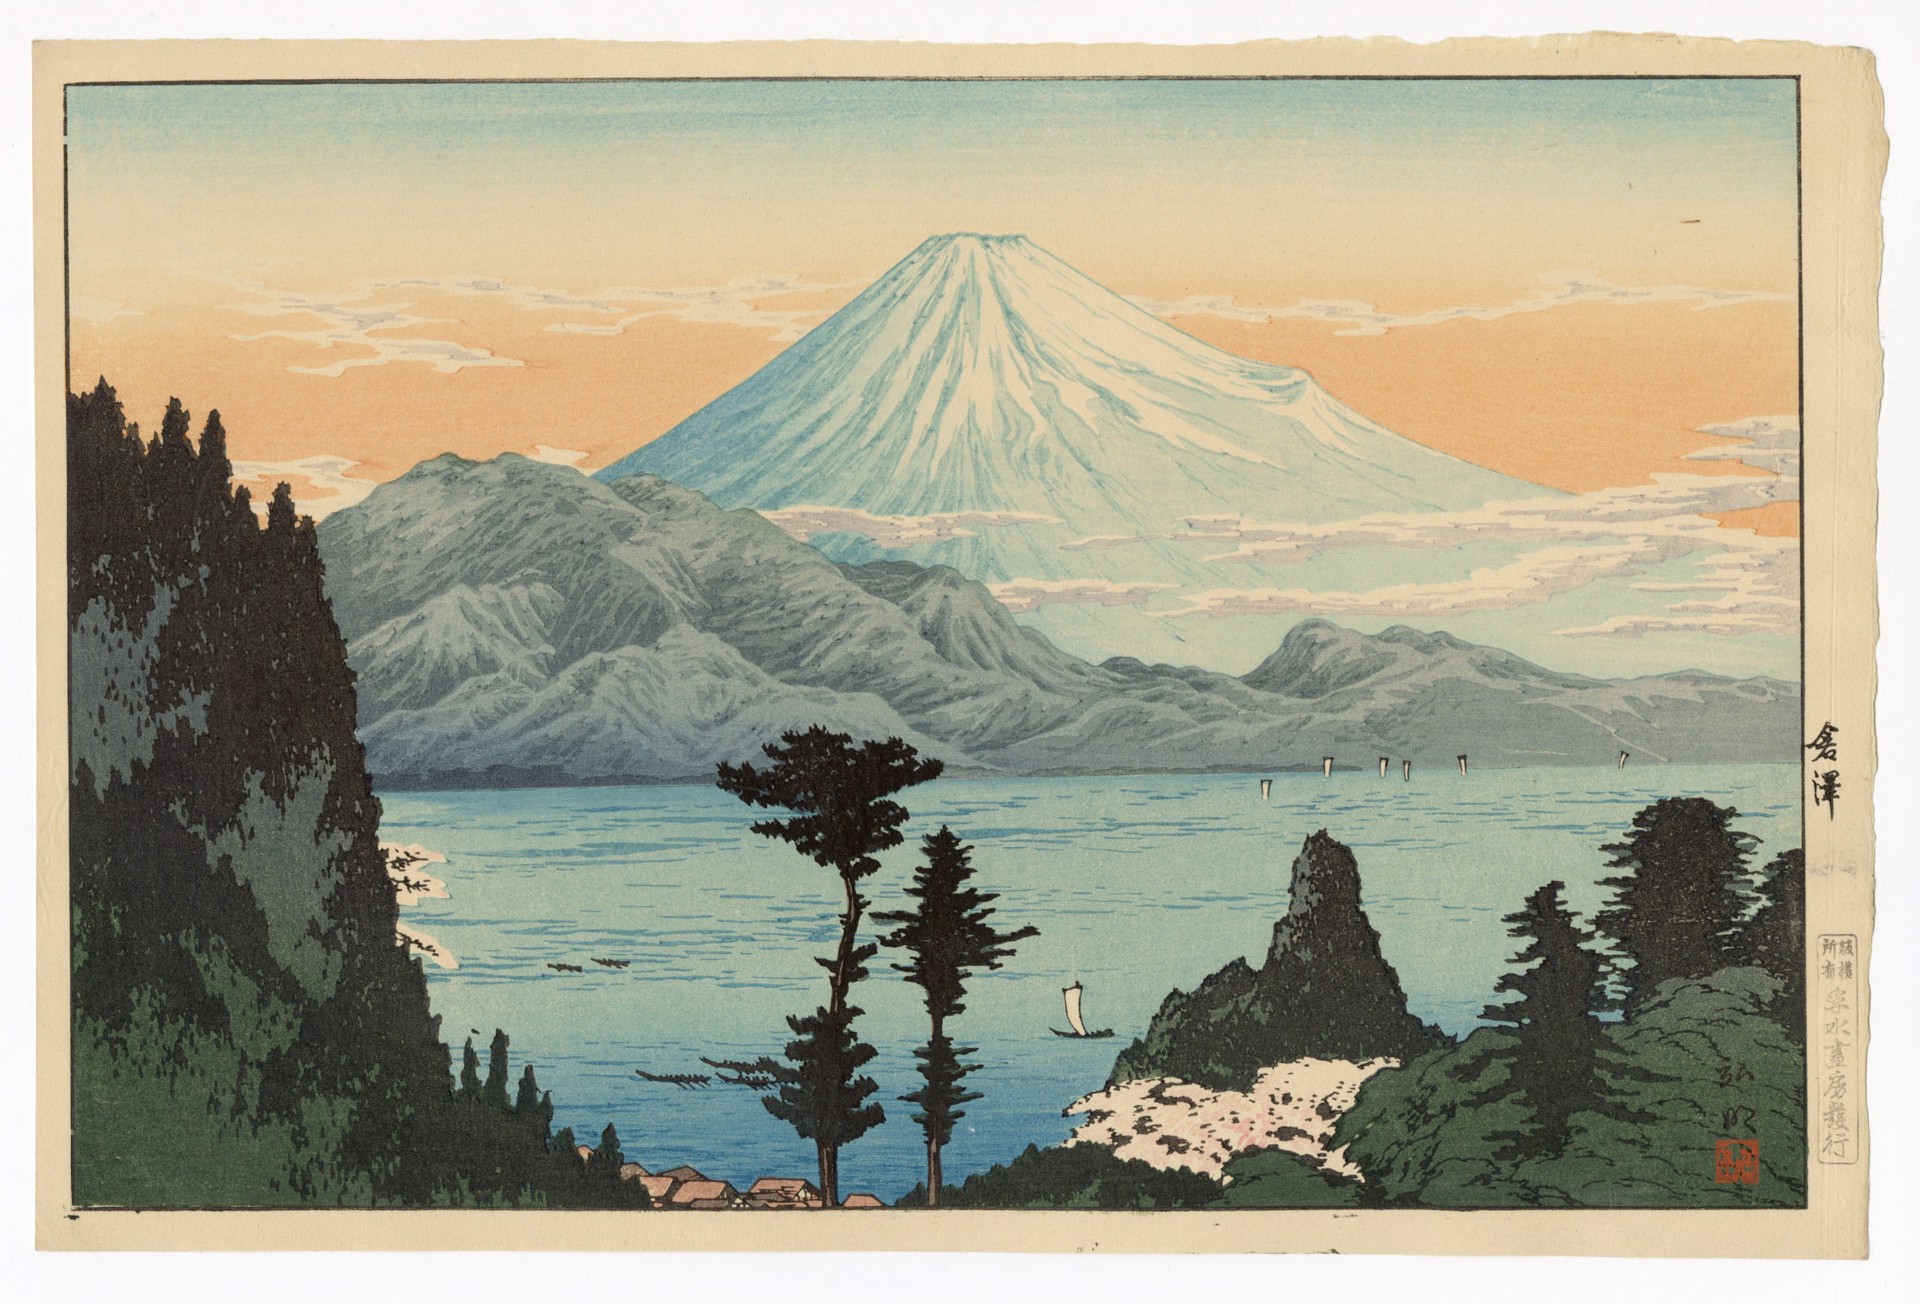 Kurasawa Mt. Fuji in the Four Seasons by Takahashi Hiroaki